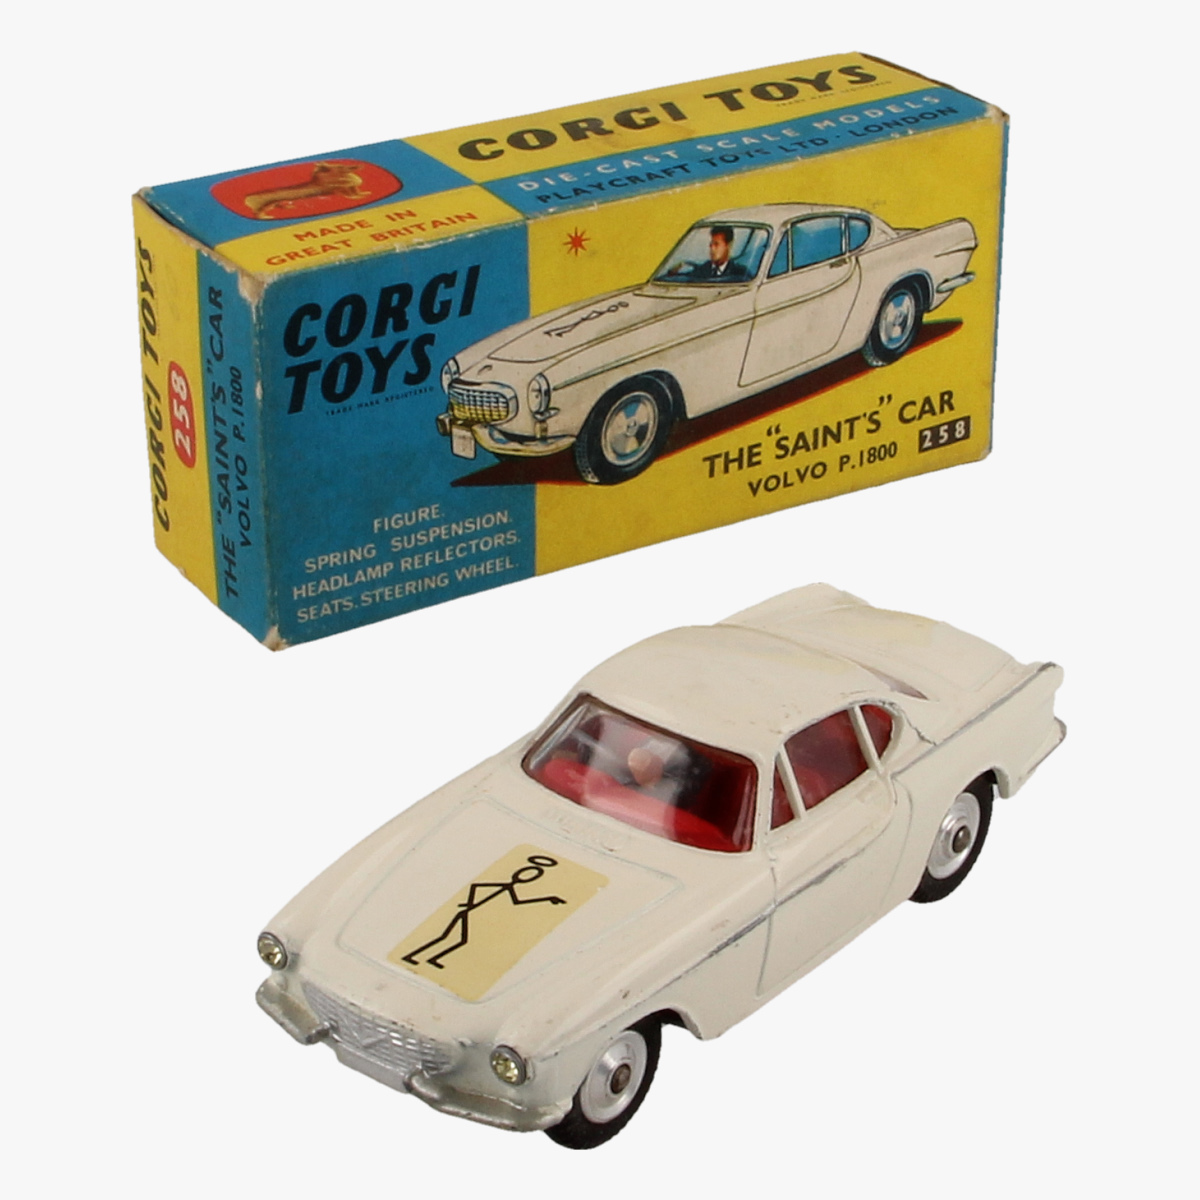 Afbeeldingen van Corgi Toys. The " Saint's" Car, Volvo P.1800. 258.